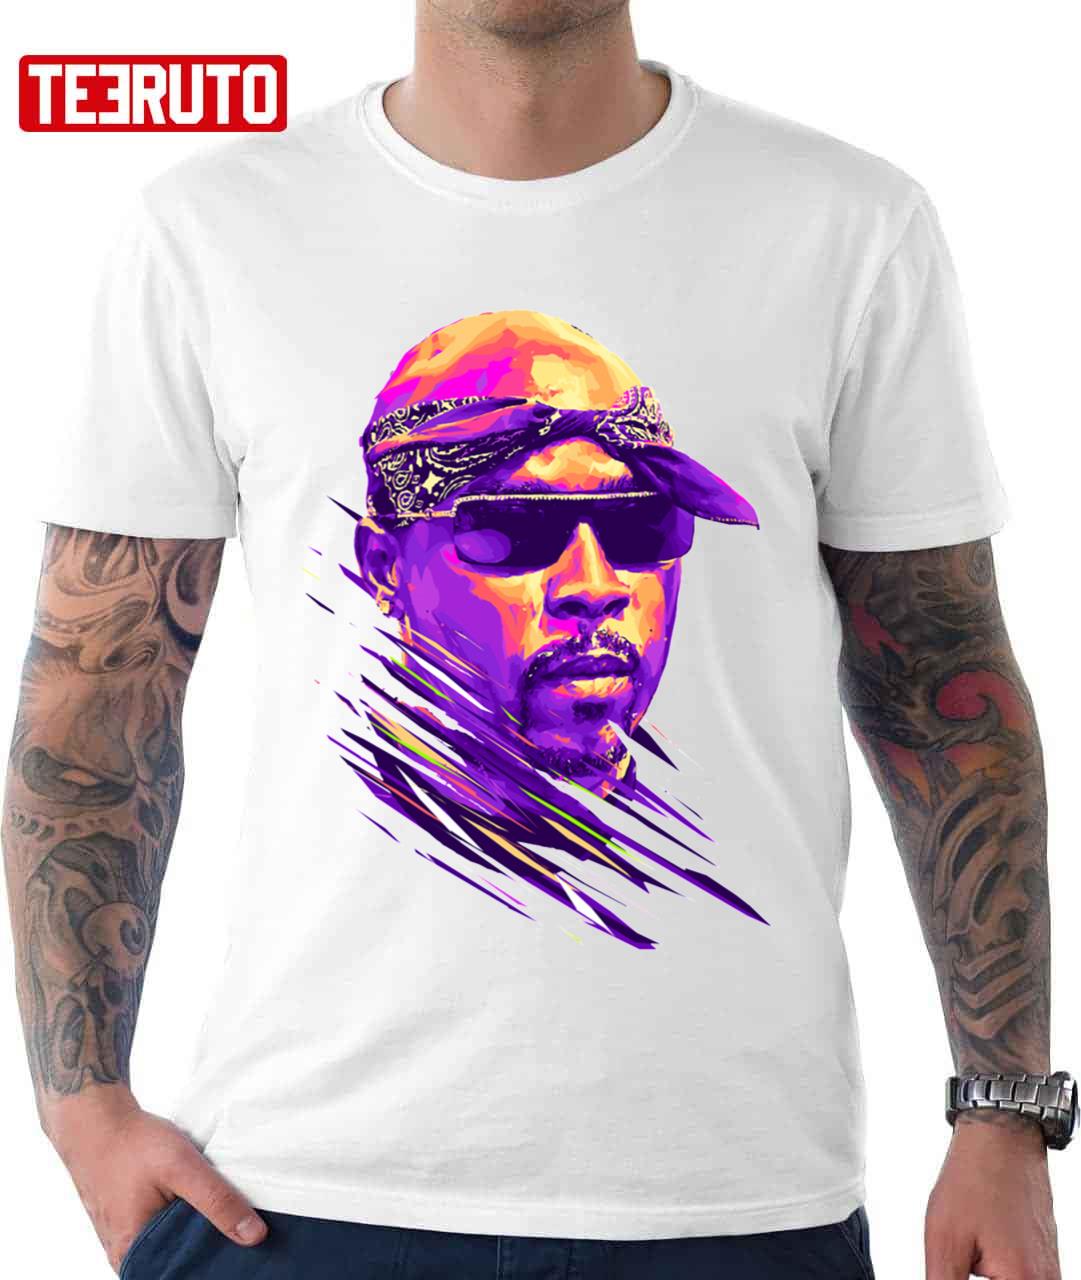 Nate Dogg West Coast Rapper Tribute Art Unisex T-shirt - Teeruto